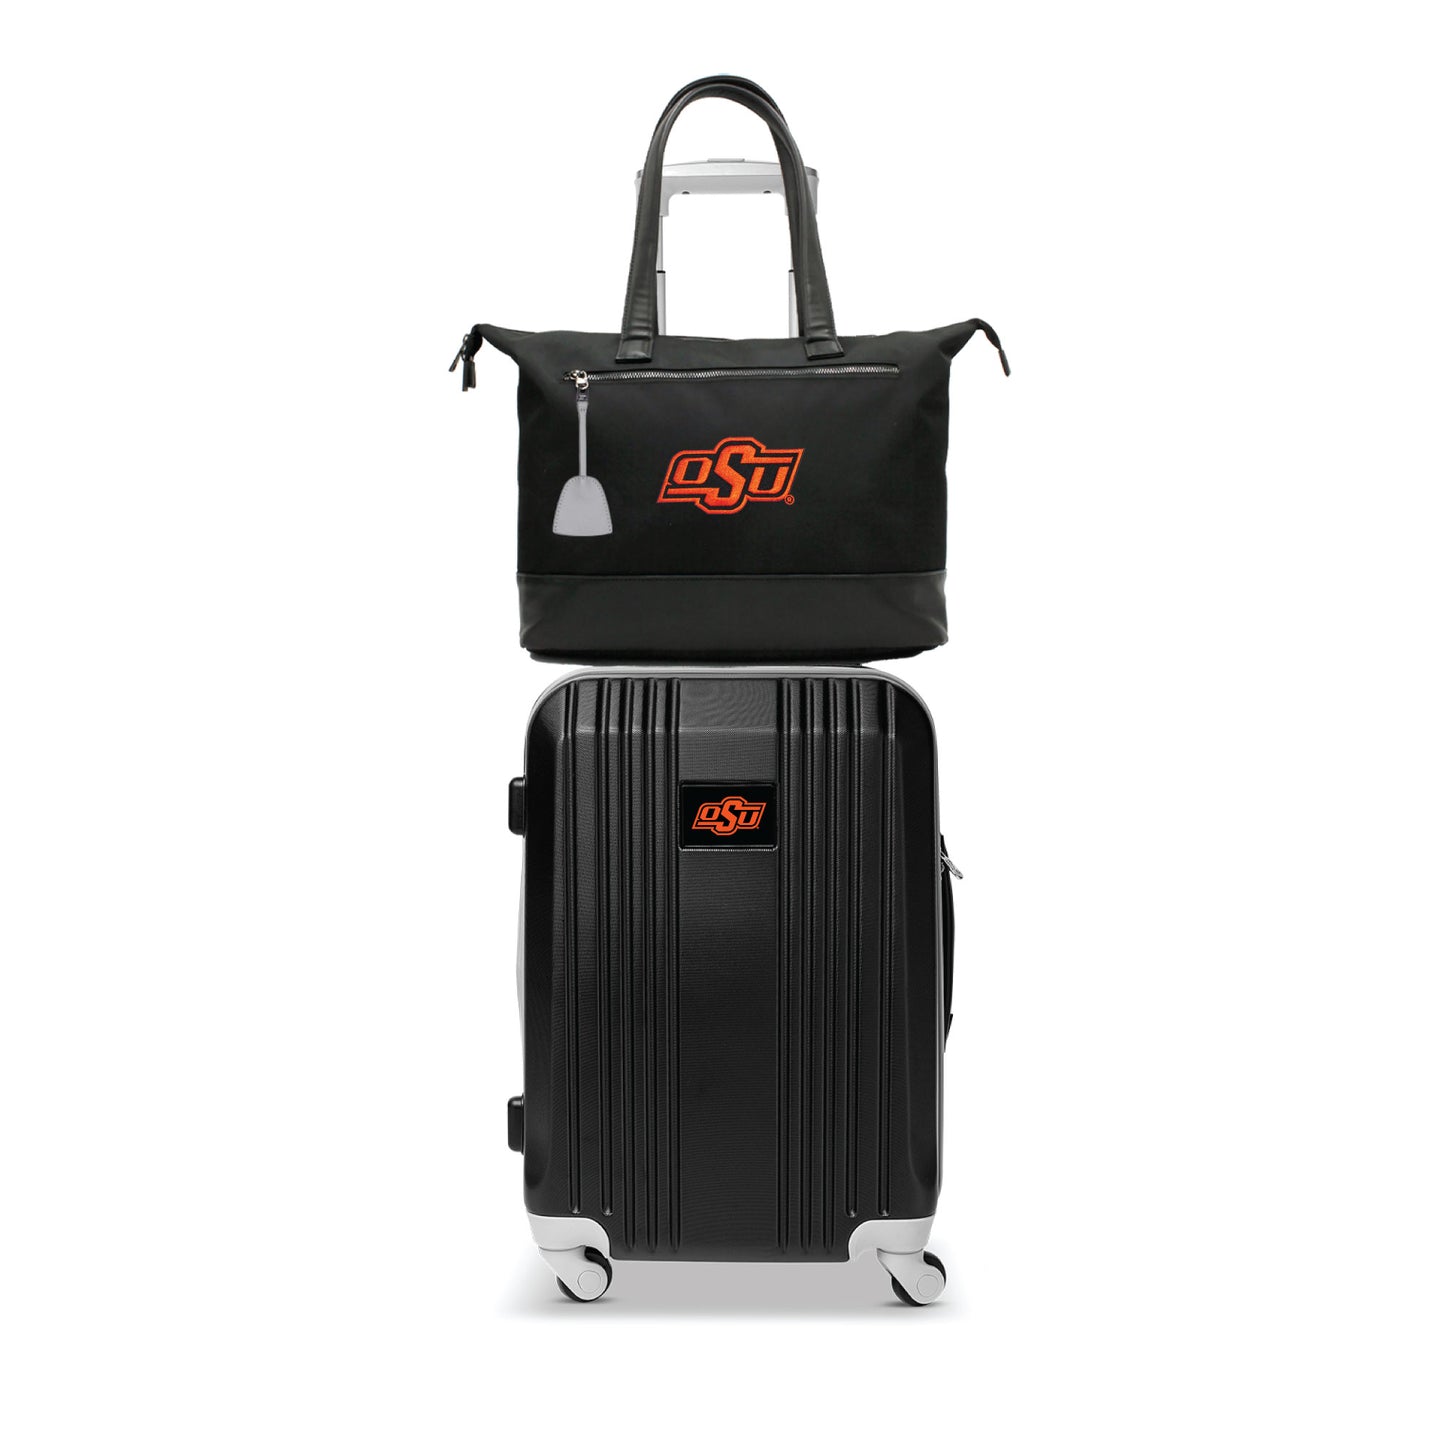 Oklahoma State Cowboys Premium Laptop Tote Bag and Luggage Set